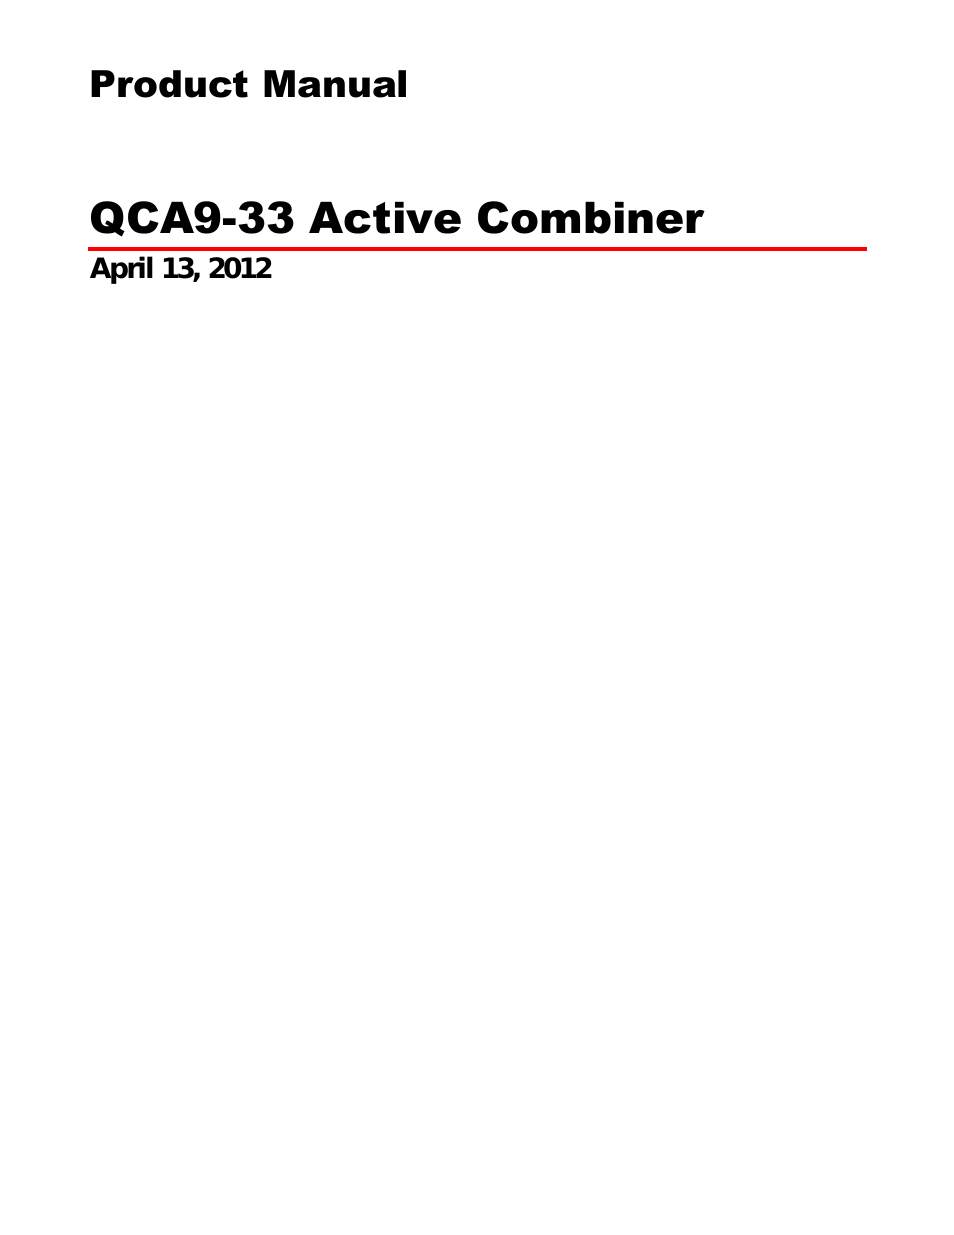 QCA9-33